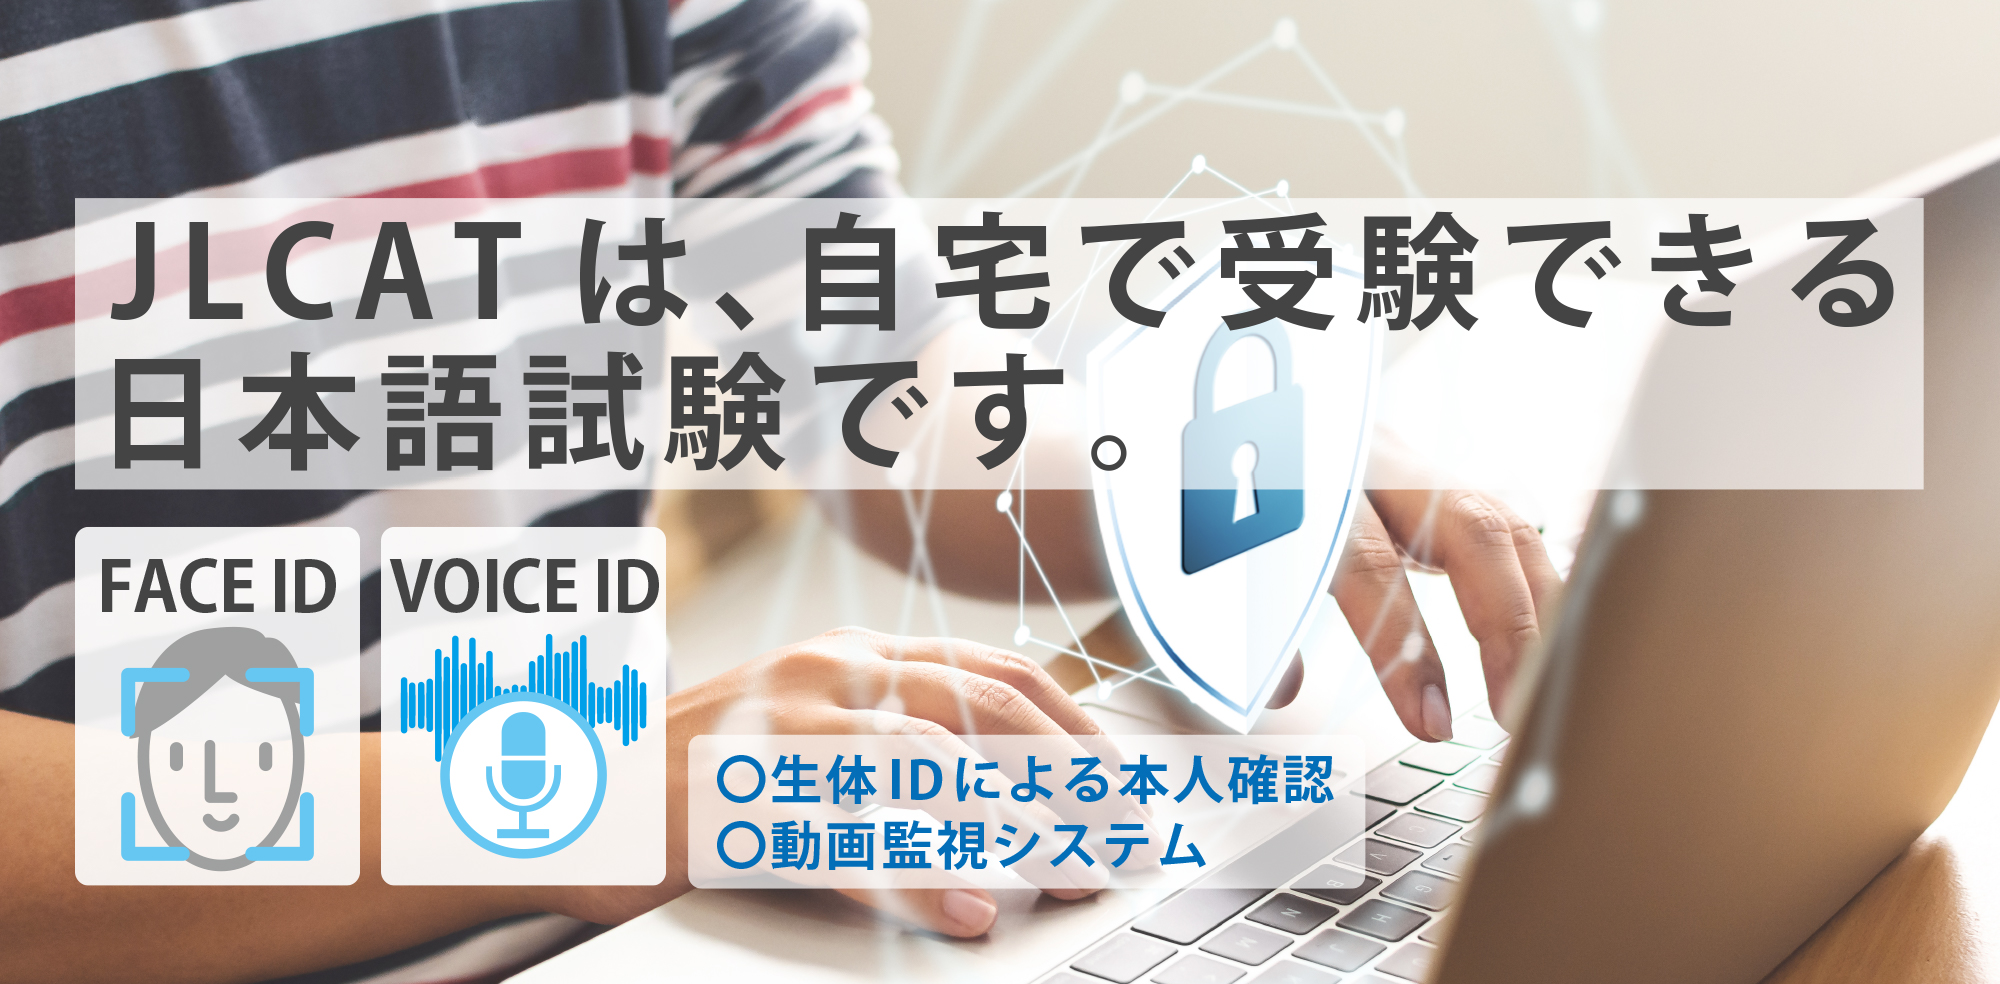 JLCATは自宅で受験出来る日本語試験